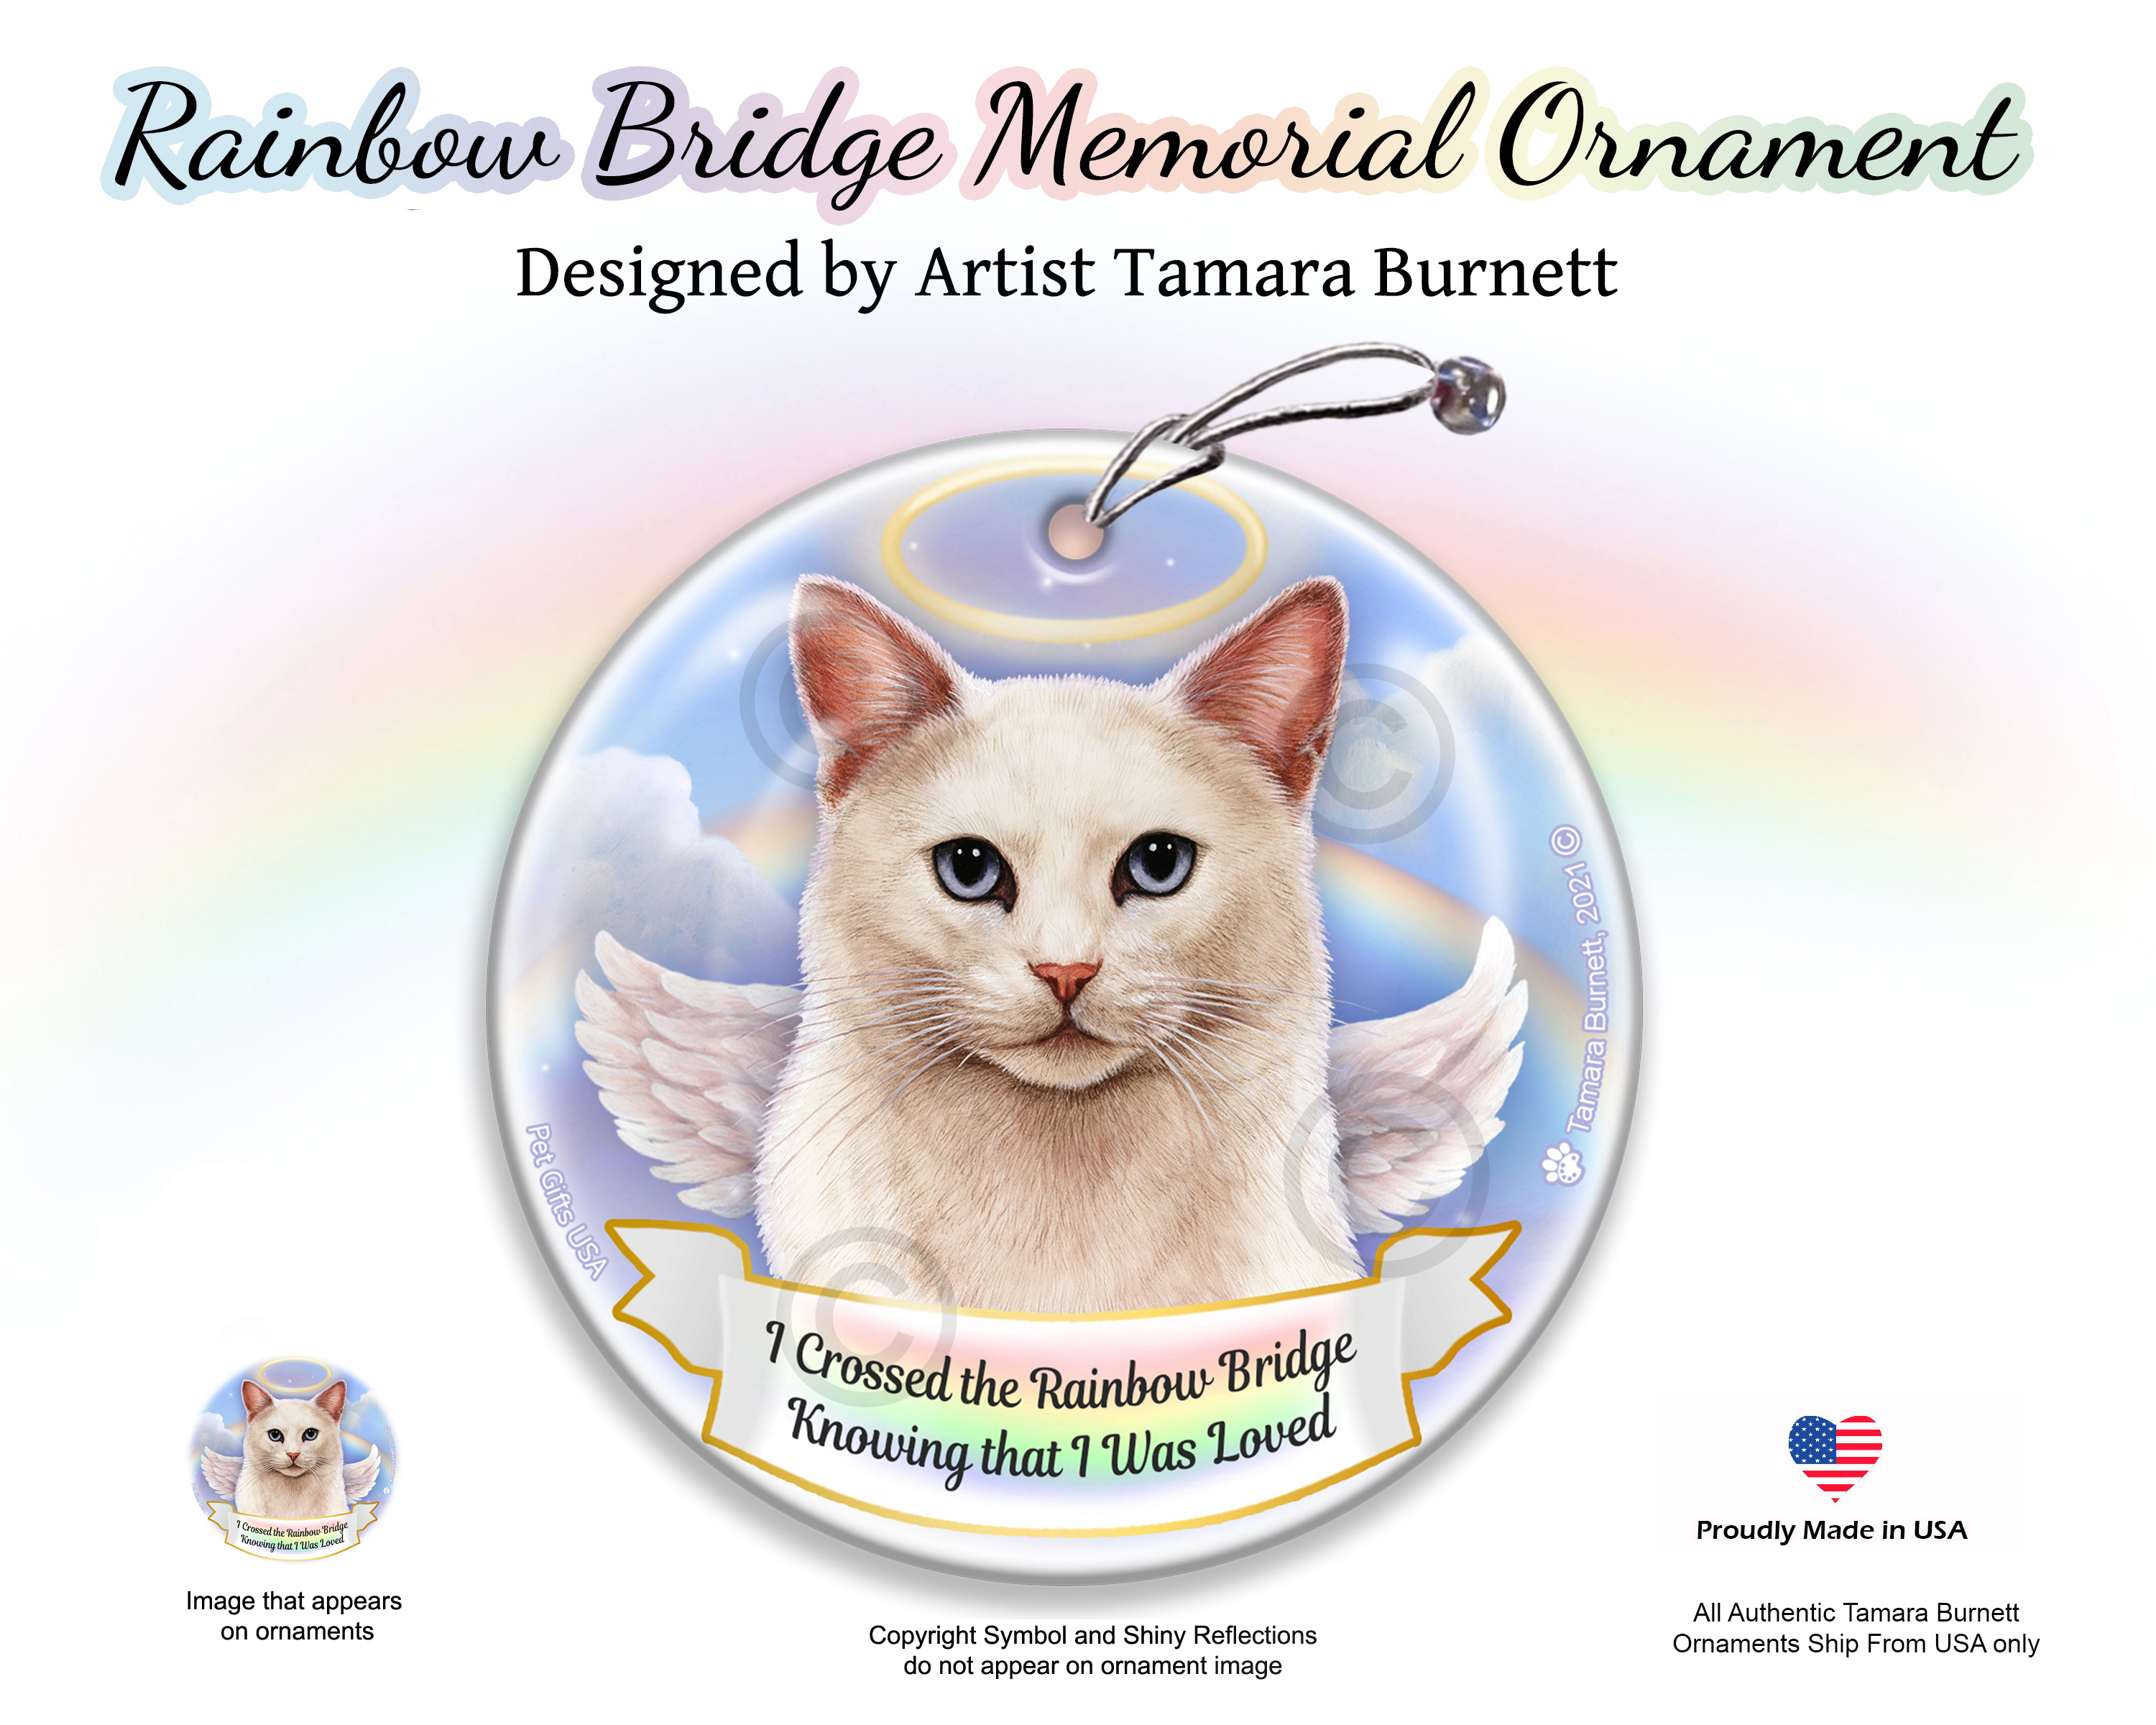 White Cat, SH, Blue-Eyed Rainbow Bridge Memorial Ornament Image